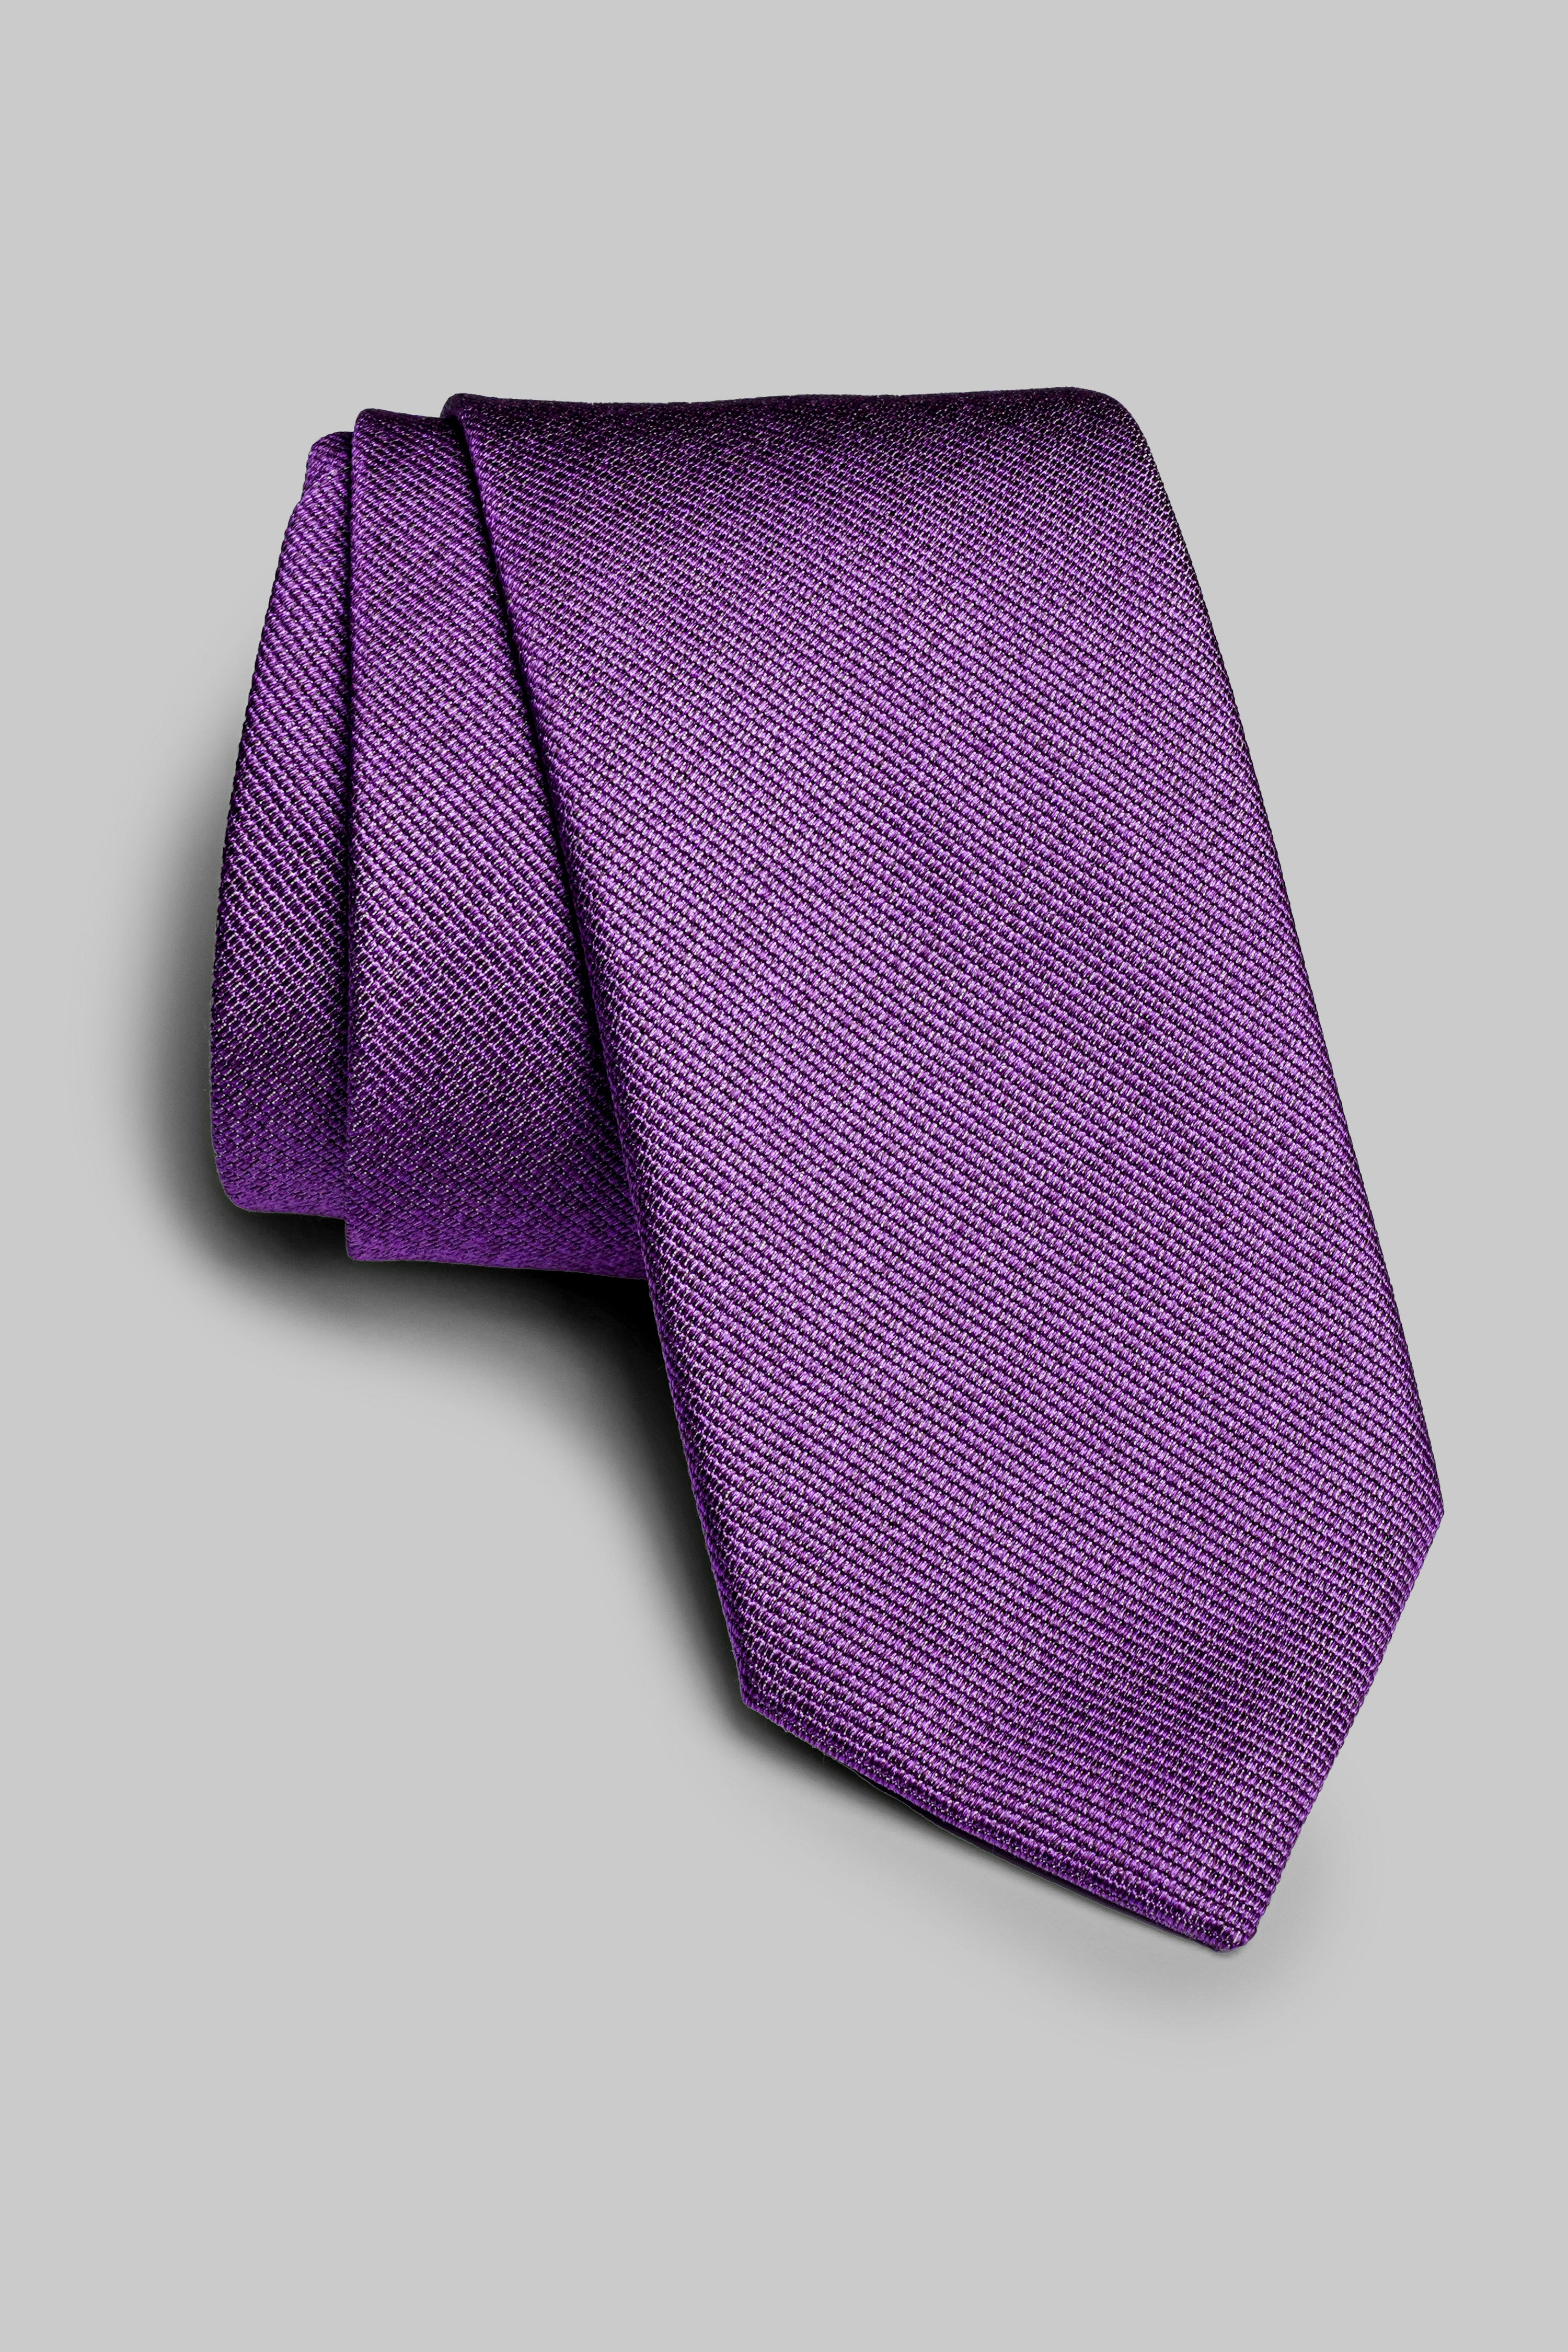 Alt view Bowman Solid Woven Tie in Purple